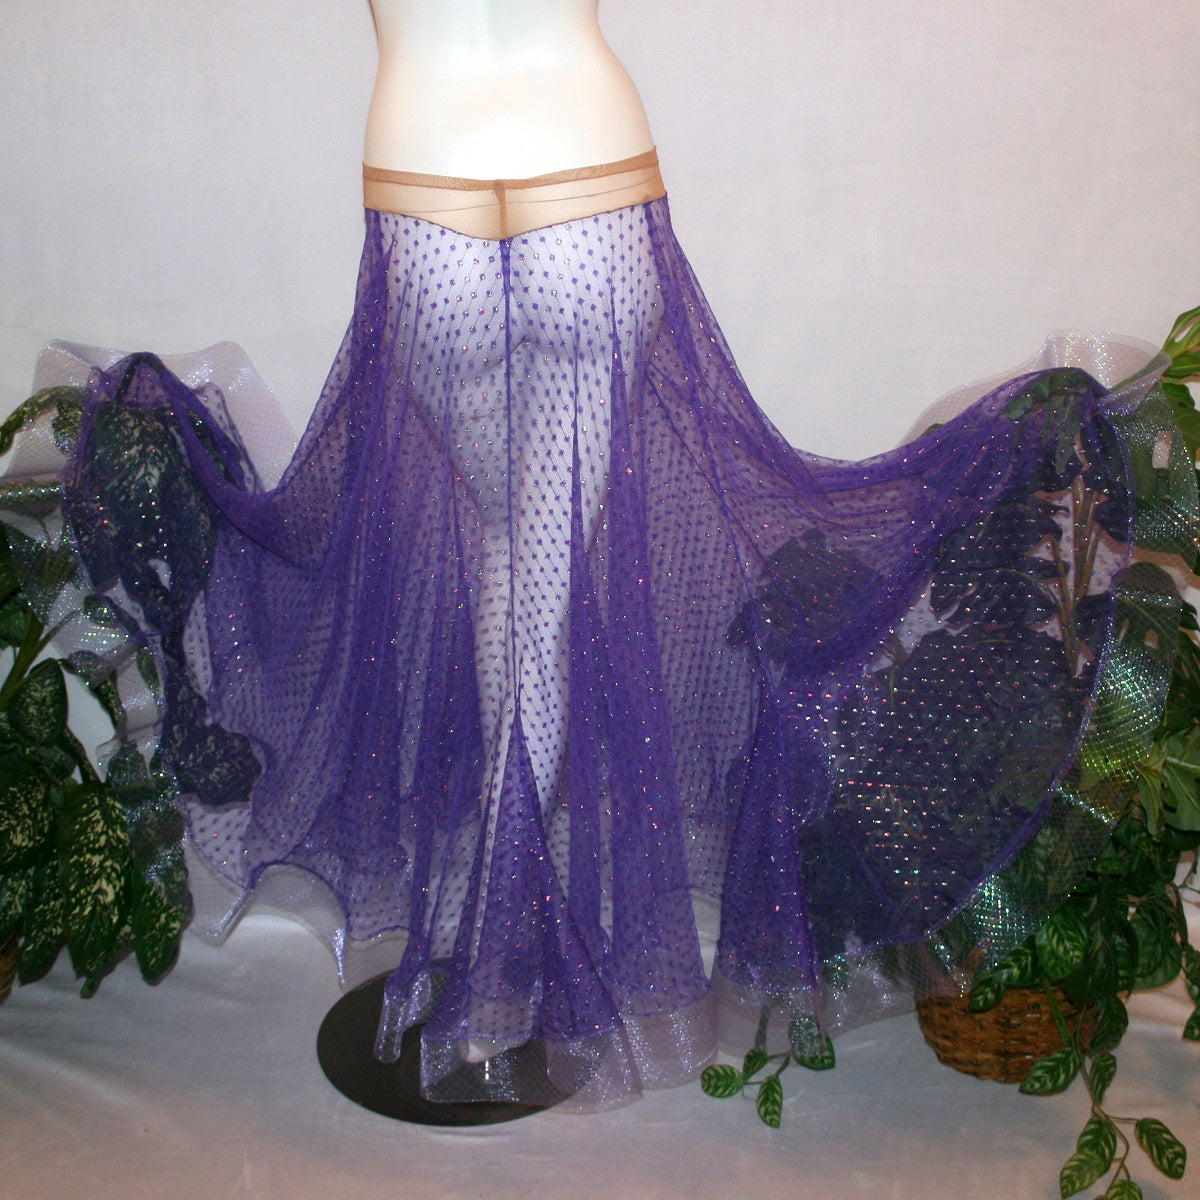 flaired back view of Purple ballroom skirt created of yards of textured purple iridescent glitter sheer fabric with 4" iridescent horsehair hem. 